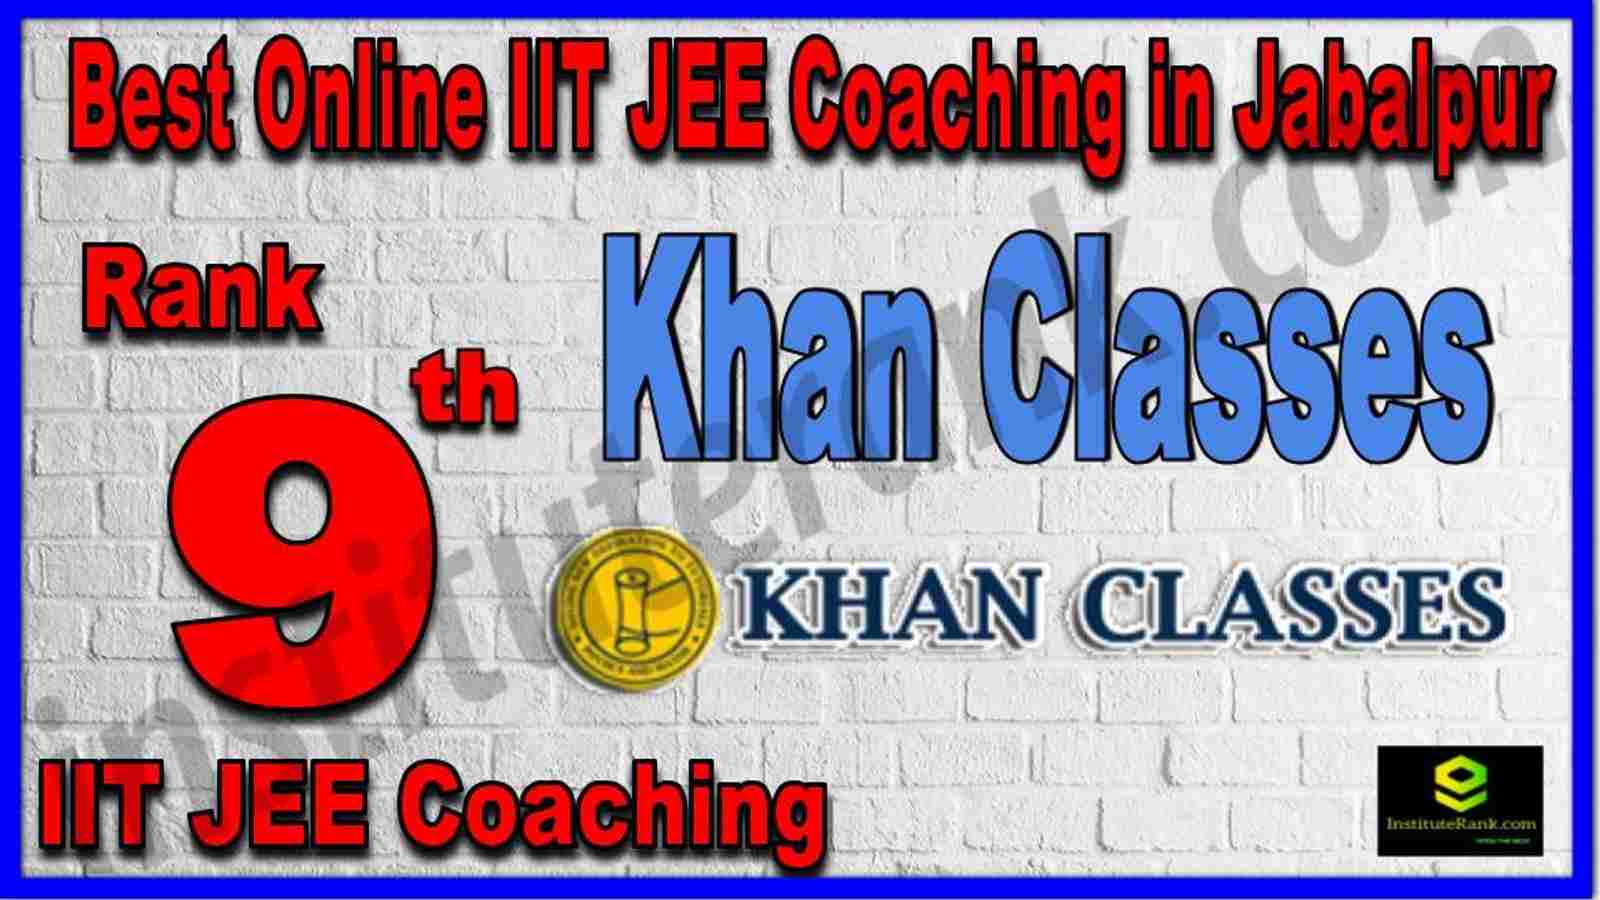 Rank 9th Best Online IIT JEE Coaching in Jabalpur